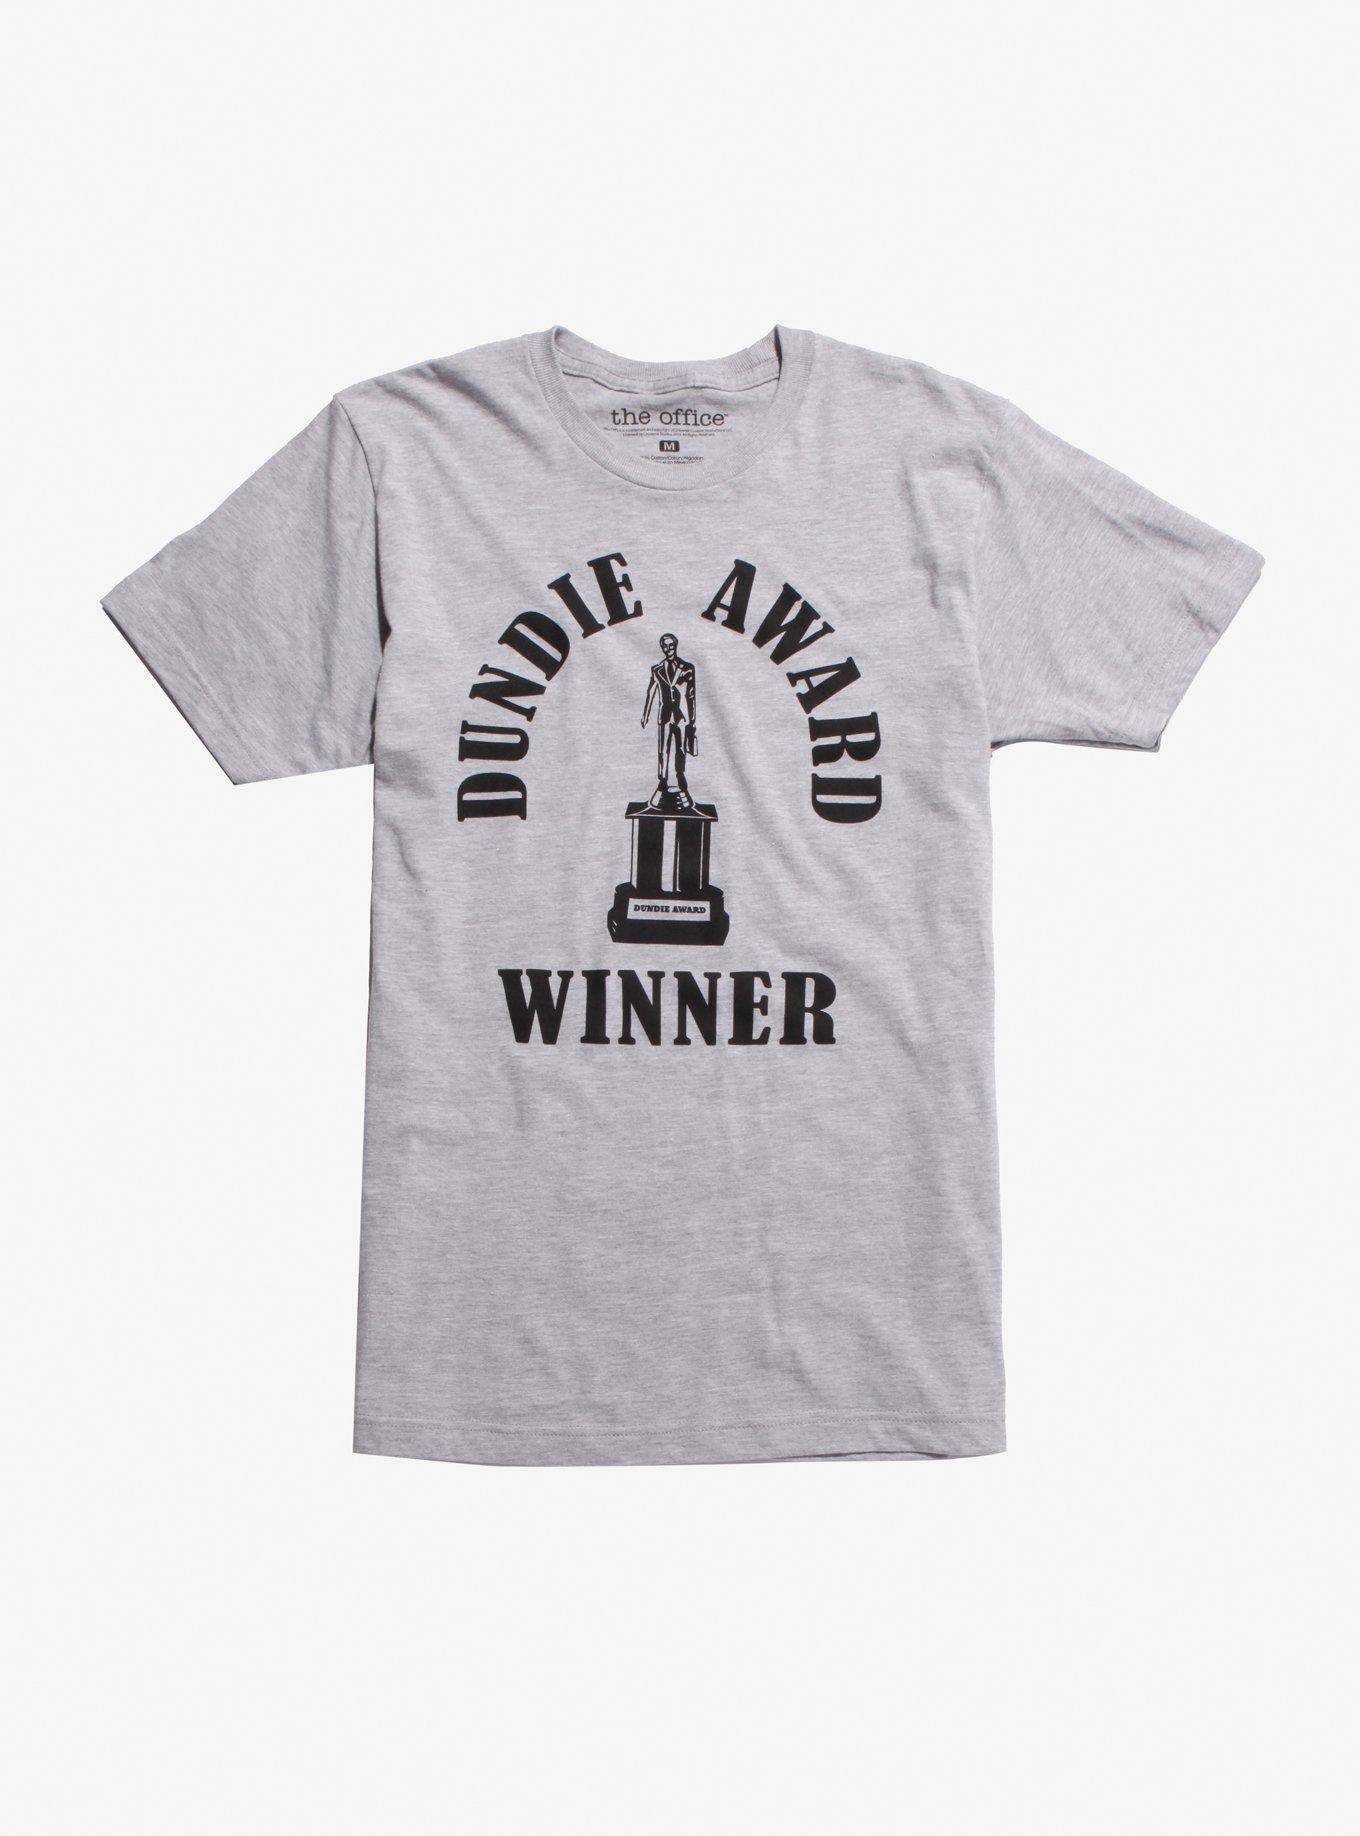 The Office Dundie Award Winner T-Shirt, GREY, hi-res